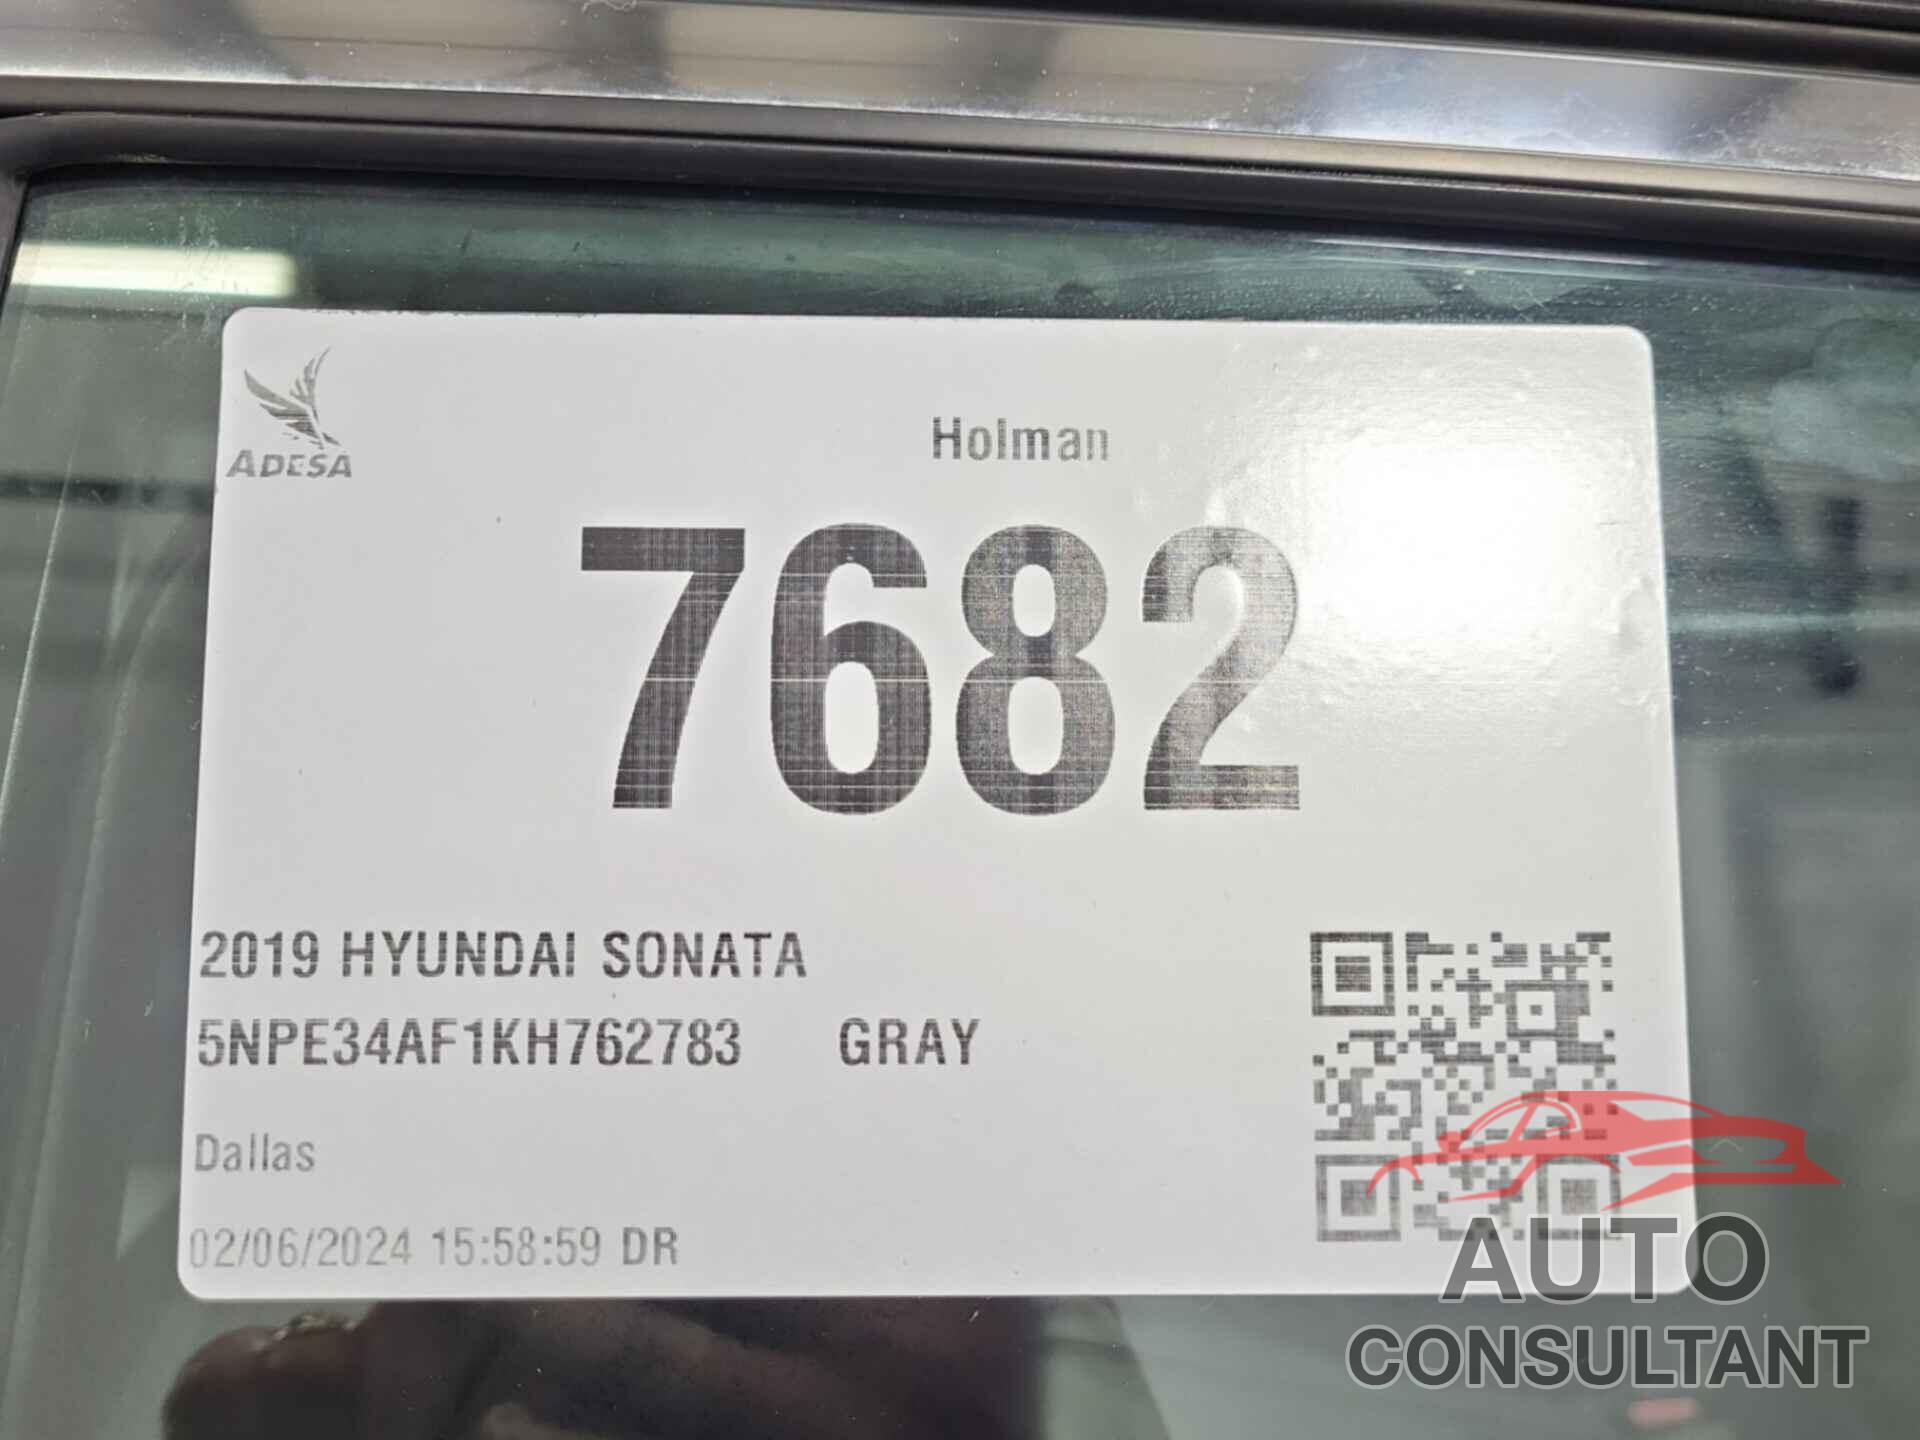 HYUNDAI SONATA 2019 - 5NPE34AF1KH762783